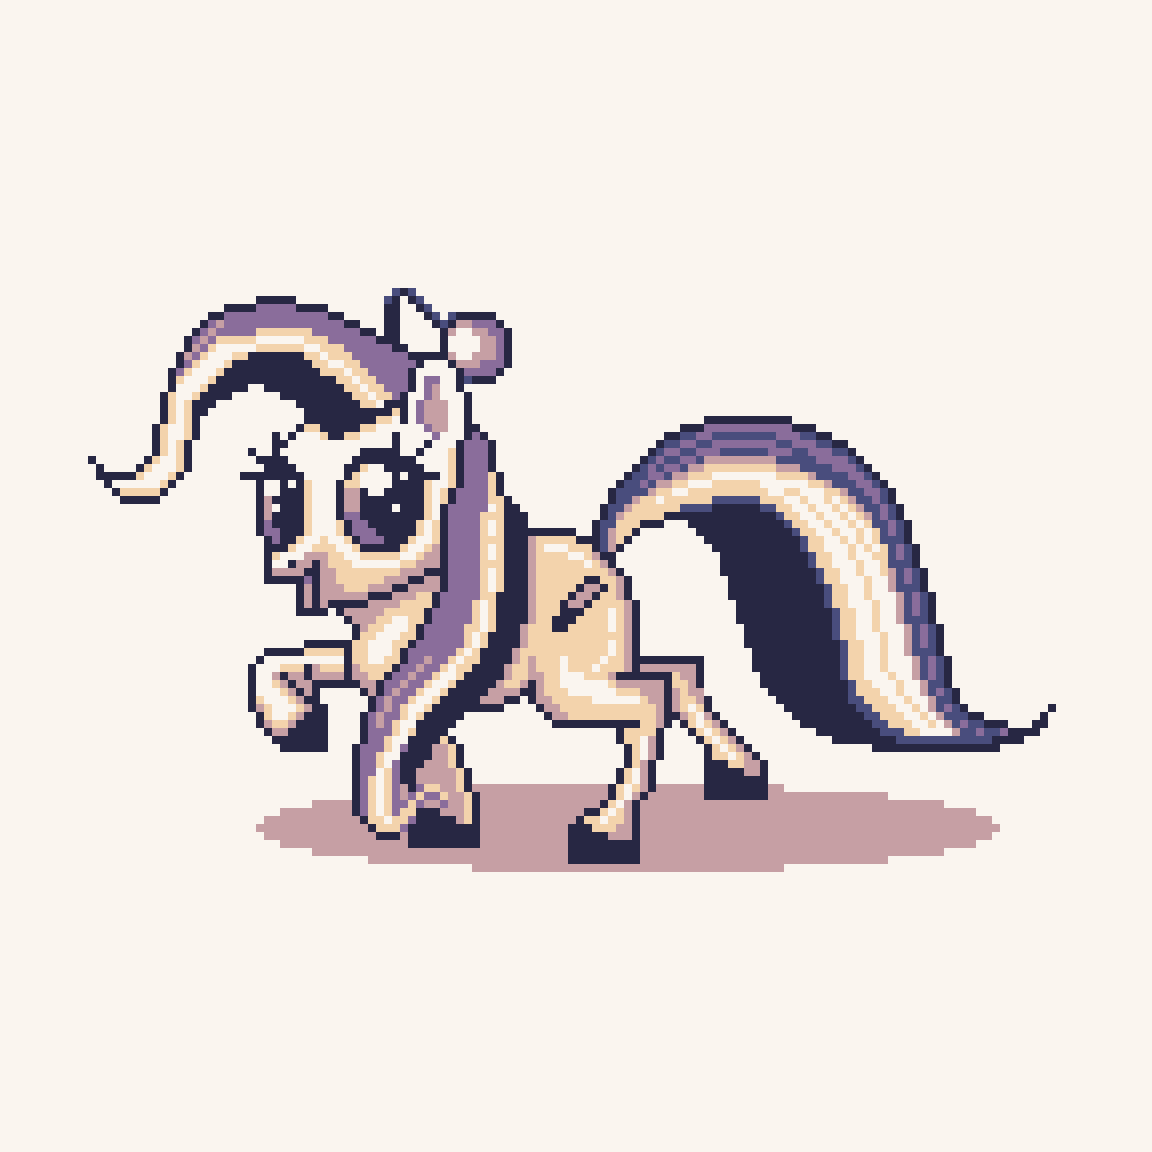 pixel art of MLP pony with a Reddit antenna on its head, looking joyful